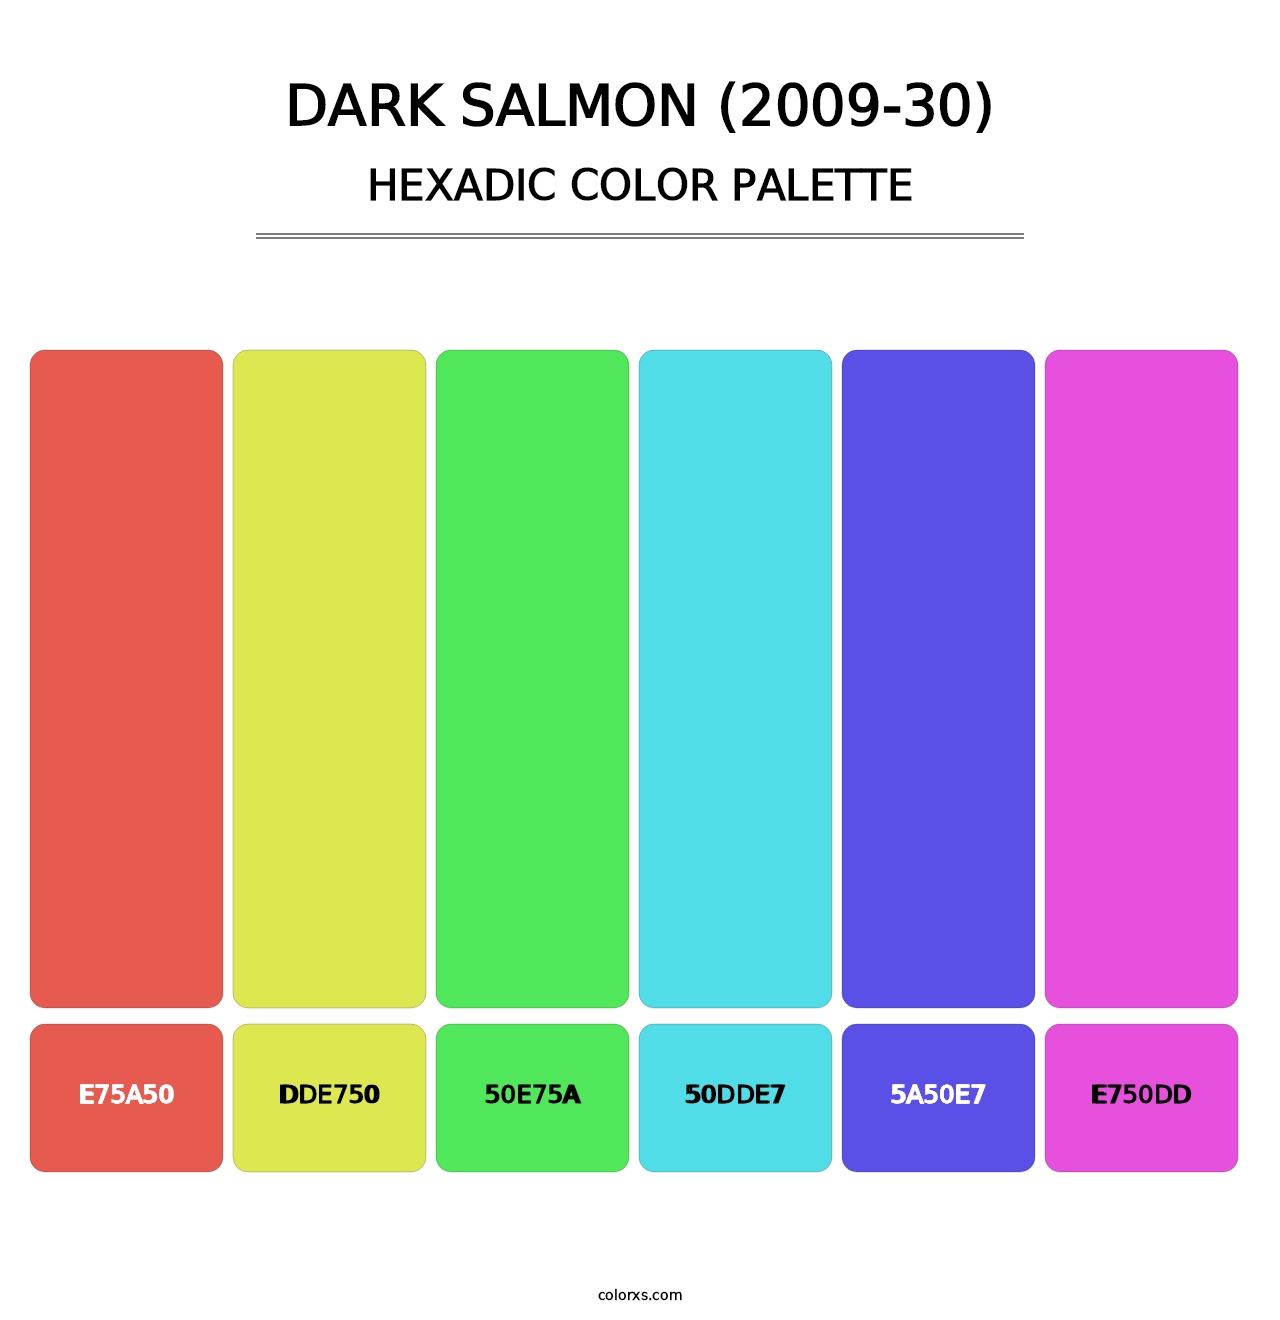 Dark Salmon (2009-30) - Hexadic Color Palette